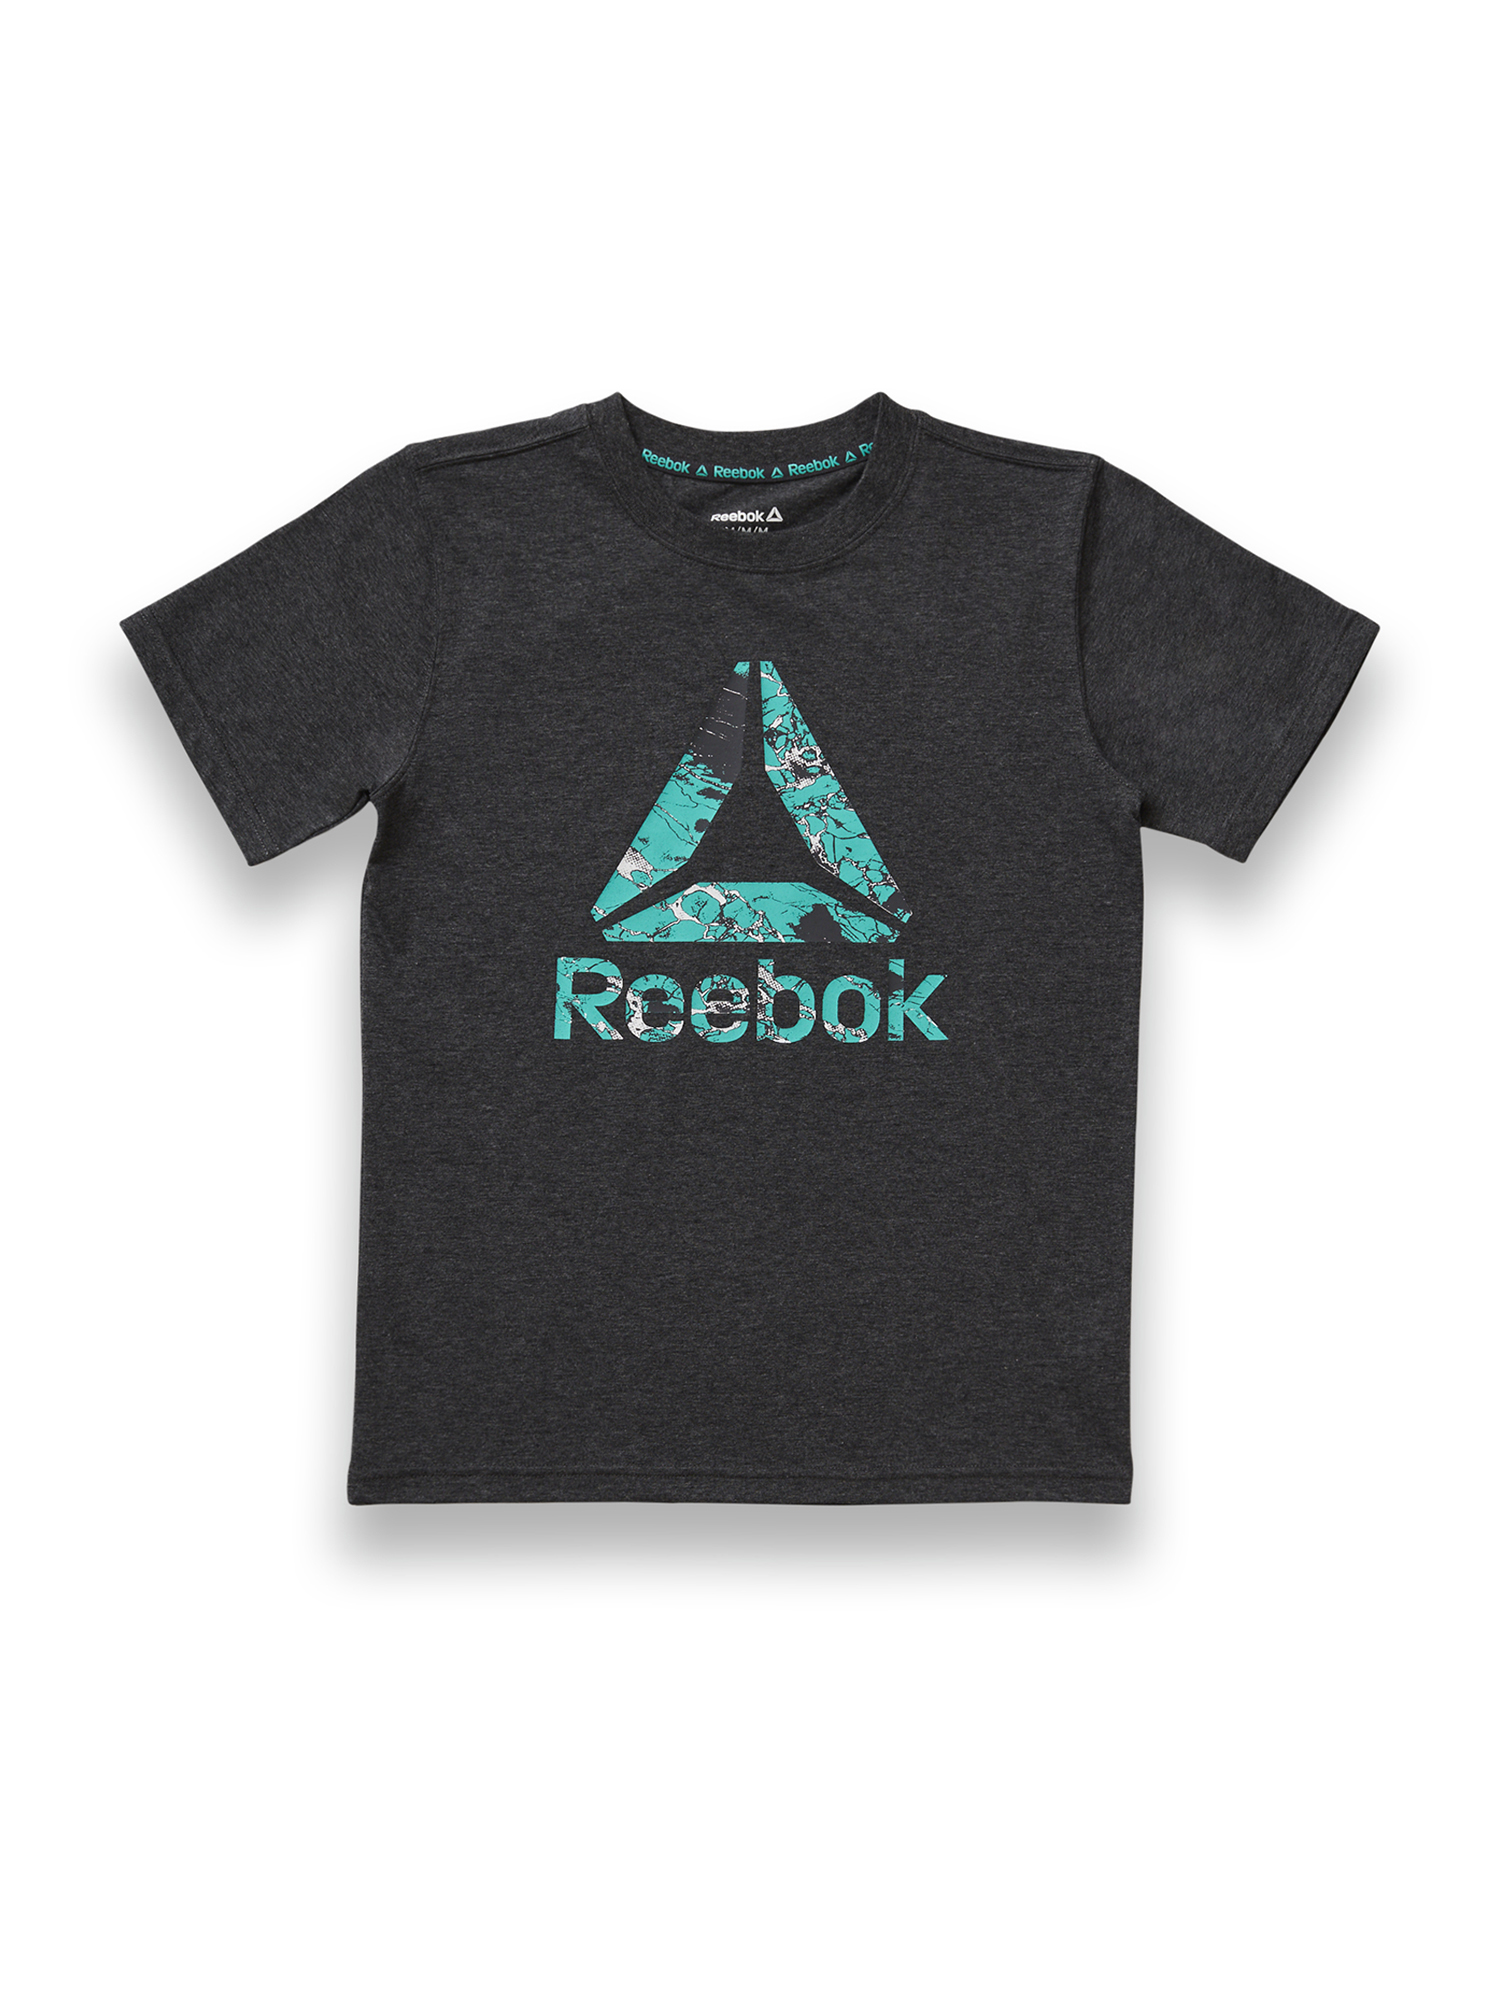 Reebok Boys Short Sleeve Graphic 2-Pack T-Shirts, Size 4-18 - image 2 of 5